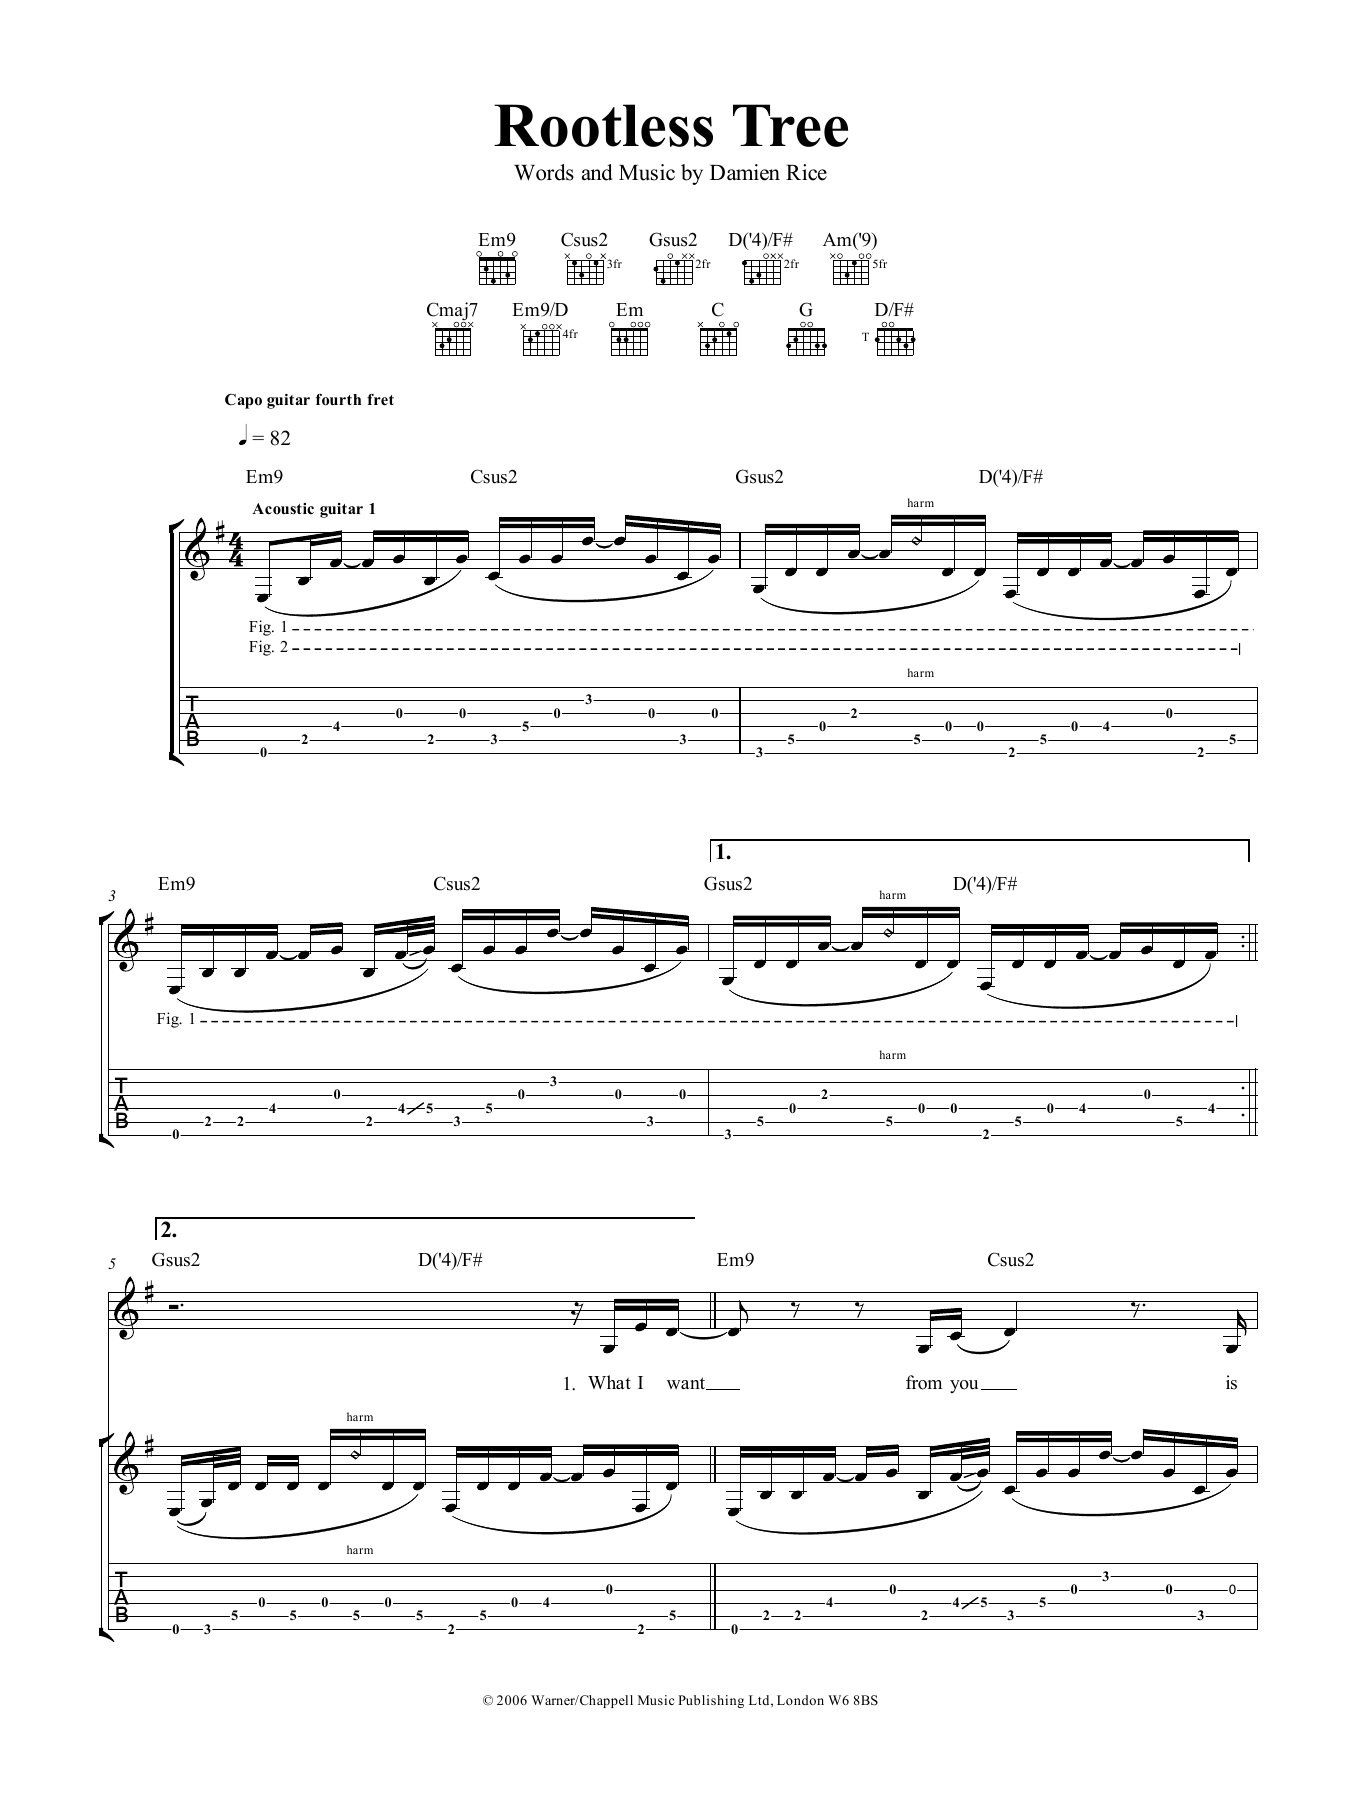 Damien Rice Rootless Tree Sheet Music Notes & Chords for Guitar Tab - Download or Print PDF